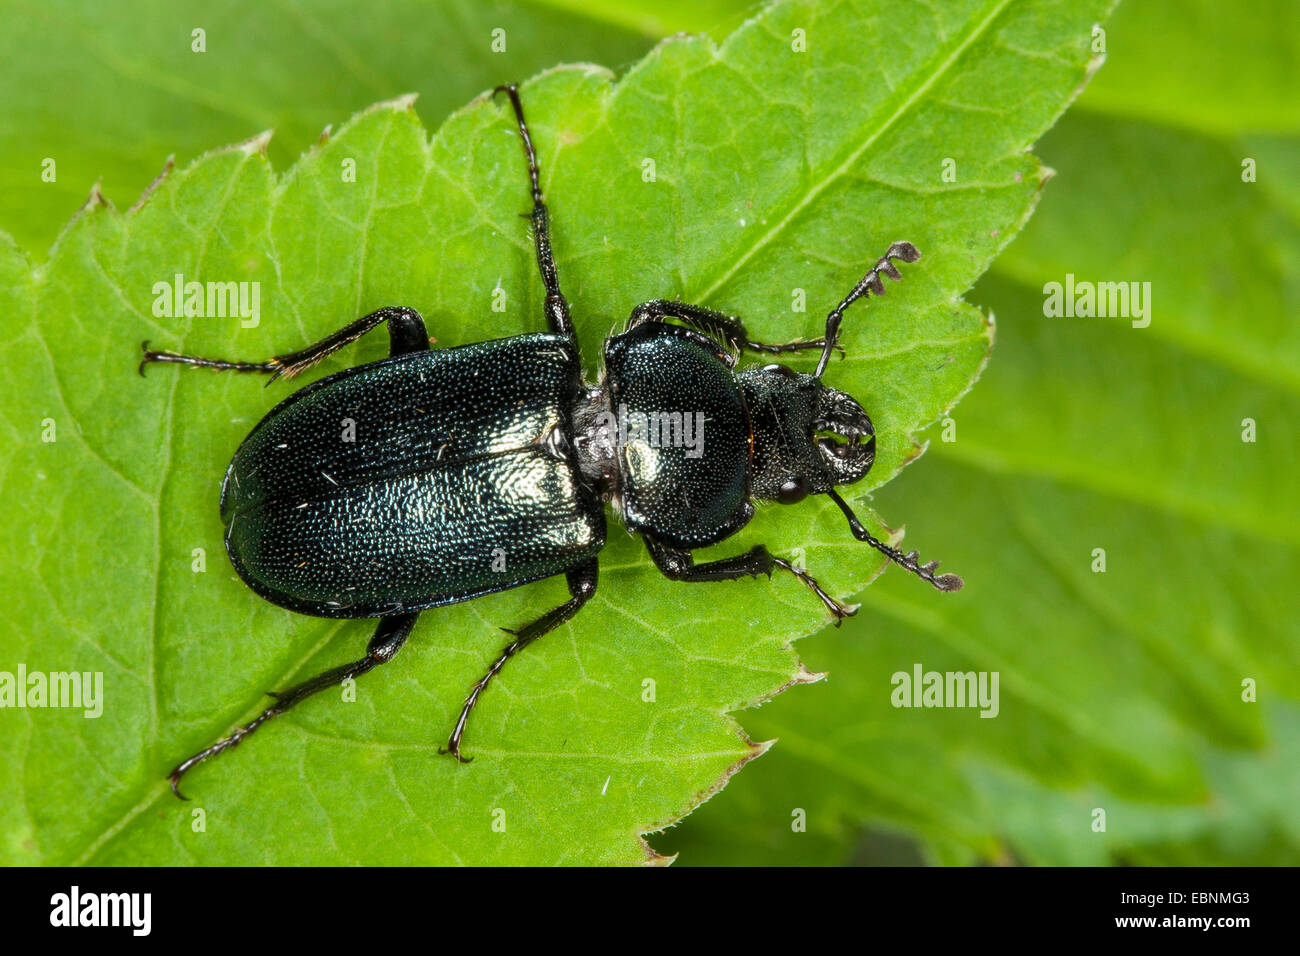 Platycerus cribatus, Blue Stag Beetle (Platycerus caraboides, Systenocerus cribatus, Platycerus  cribatus), on a leaf, Germany Stock Photo